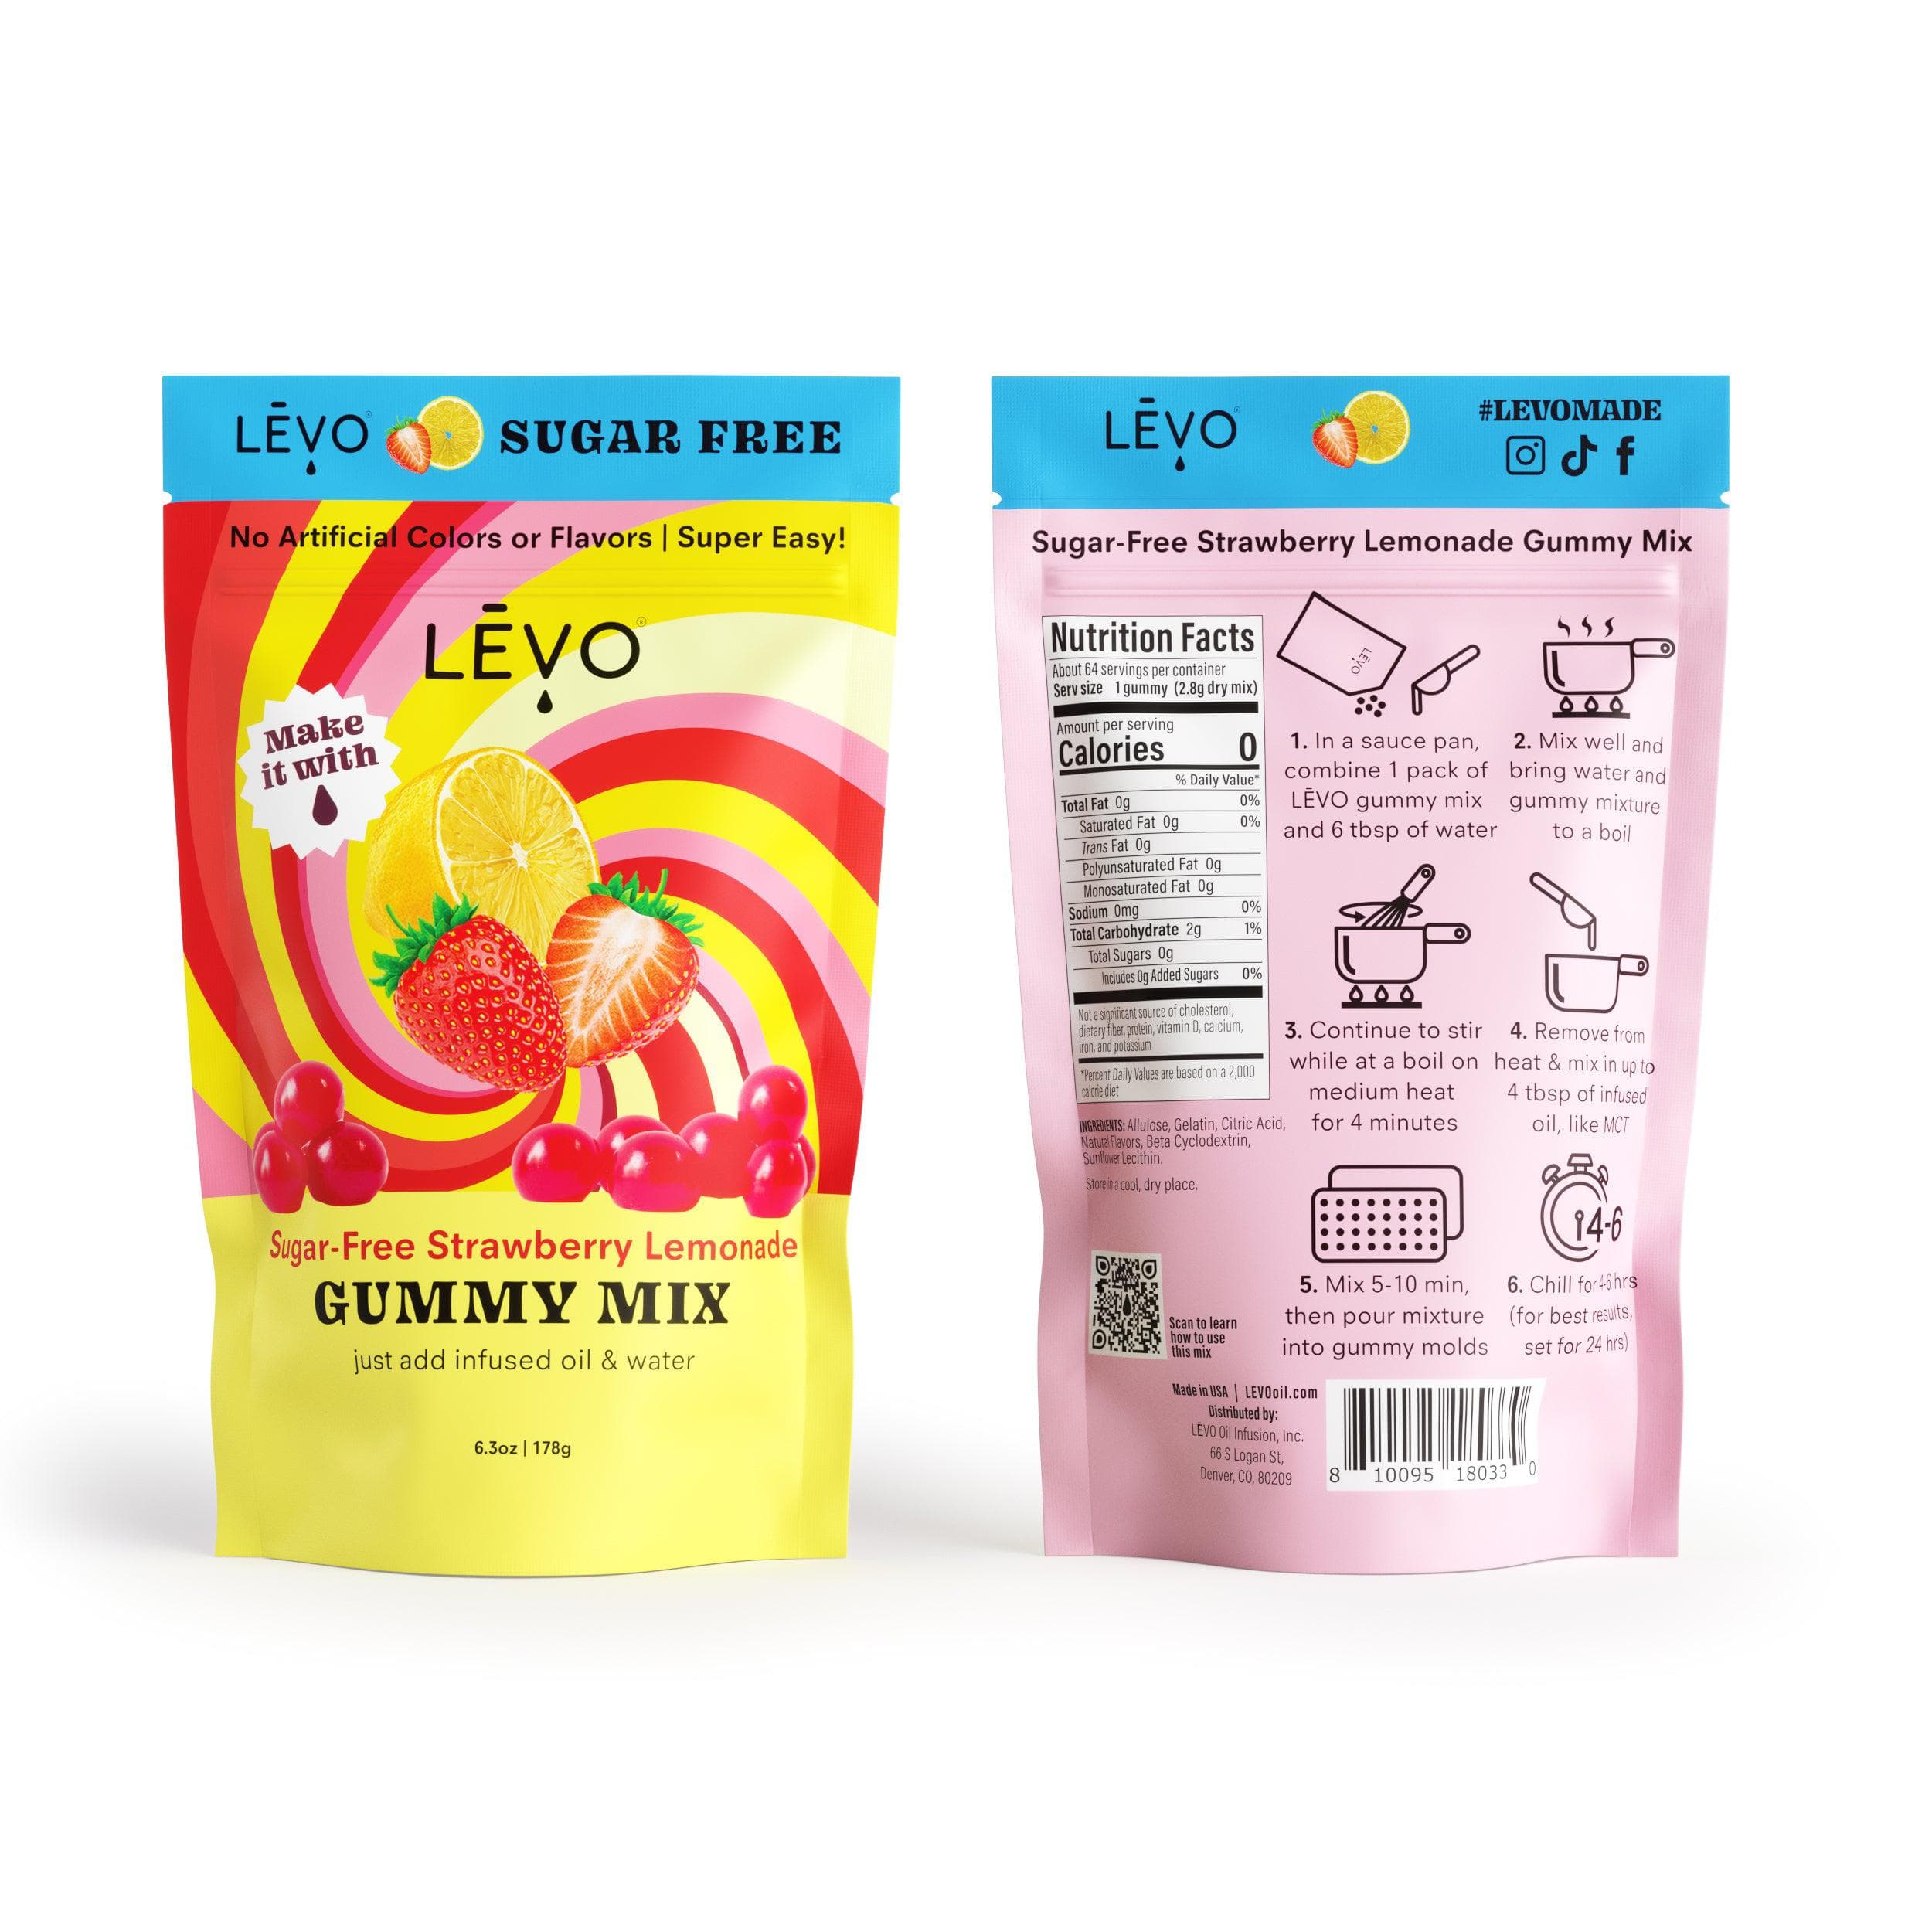 LEVO Gummy Mix Strawberry Lemonade packaging